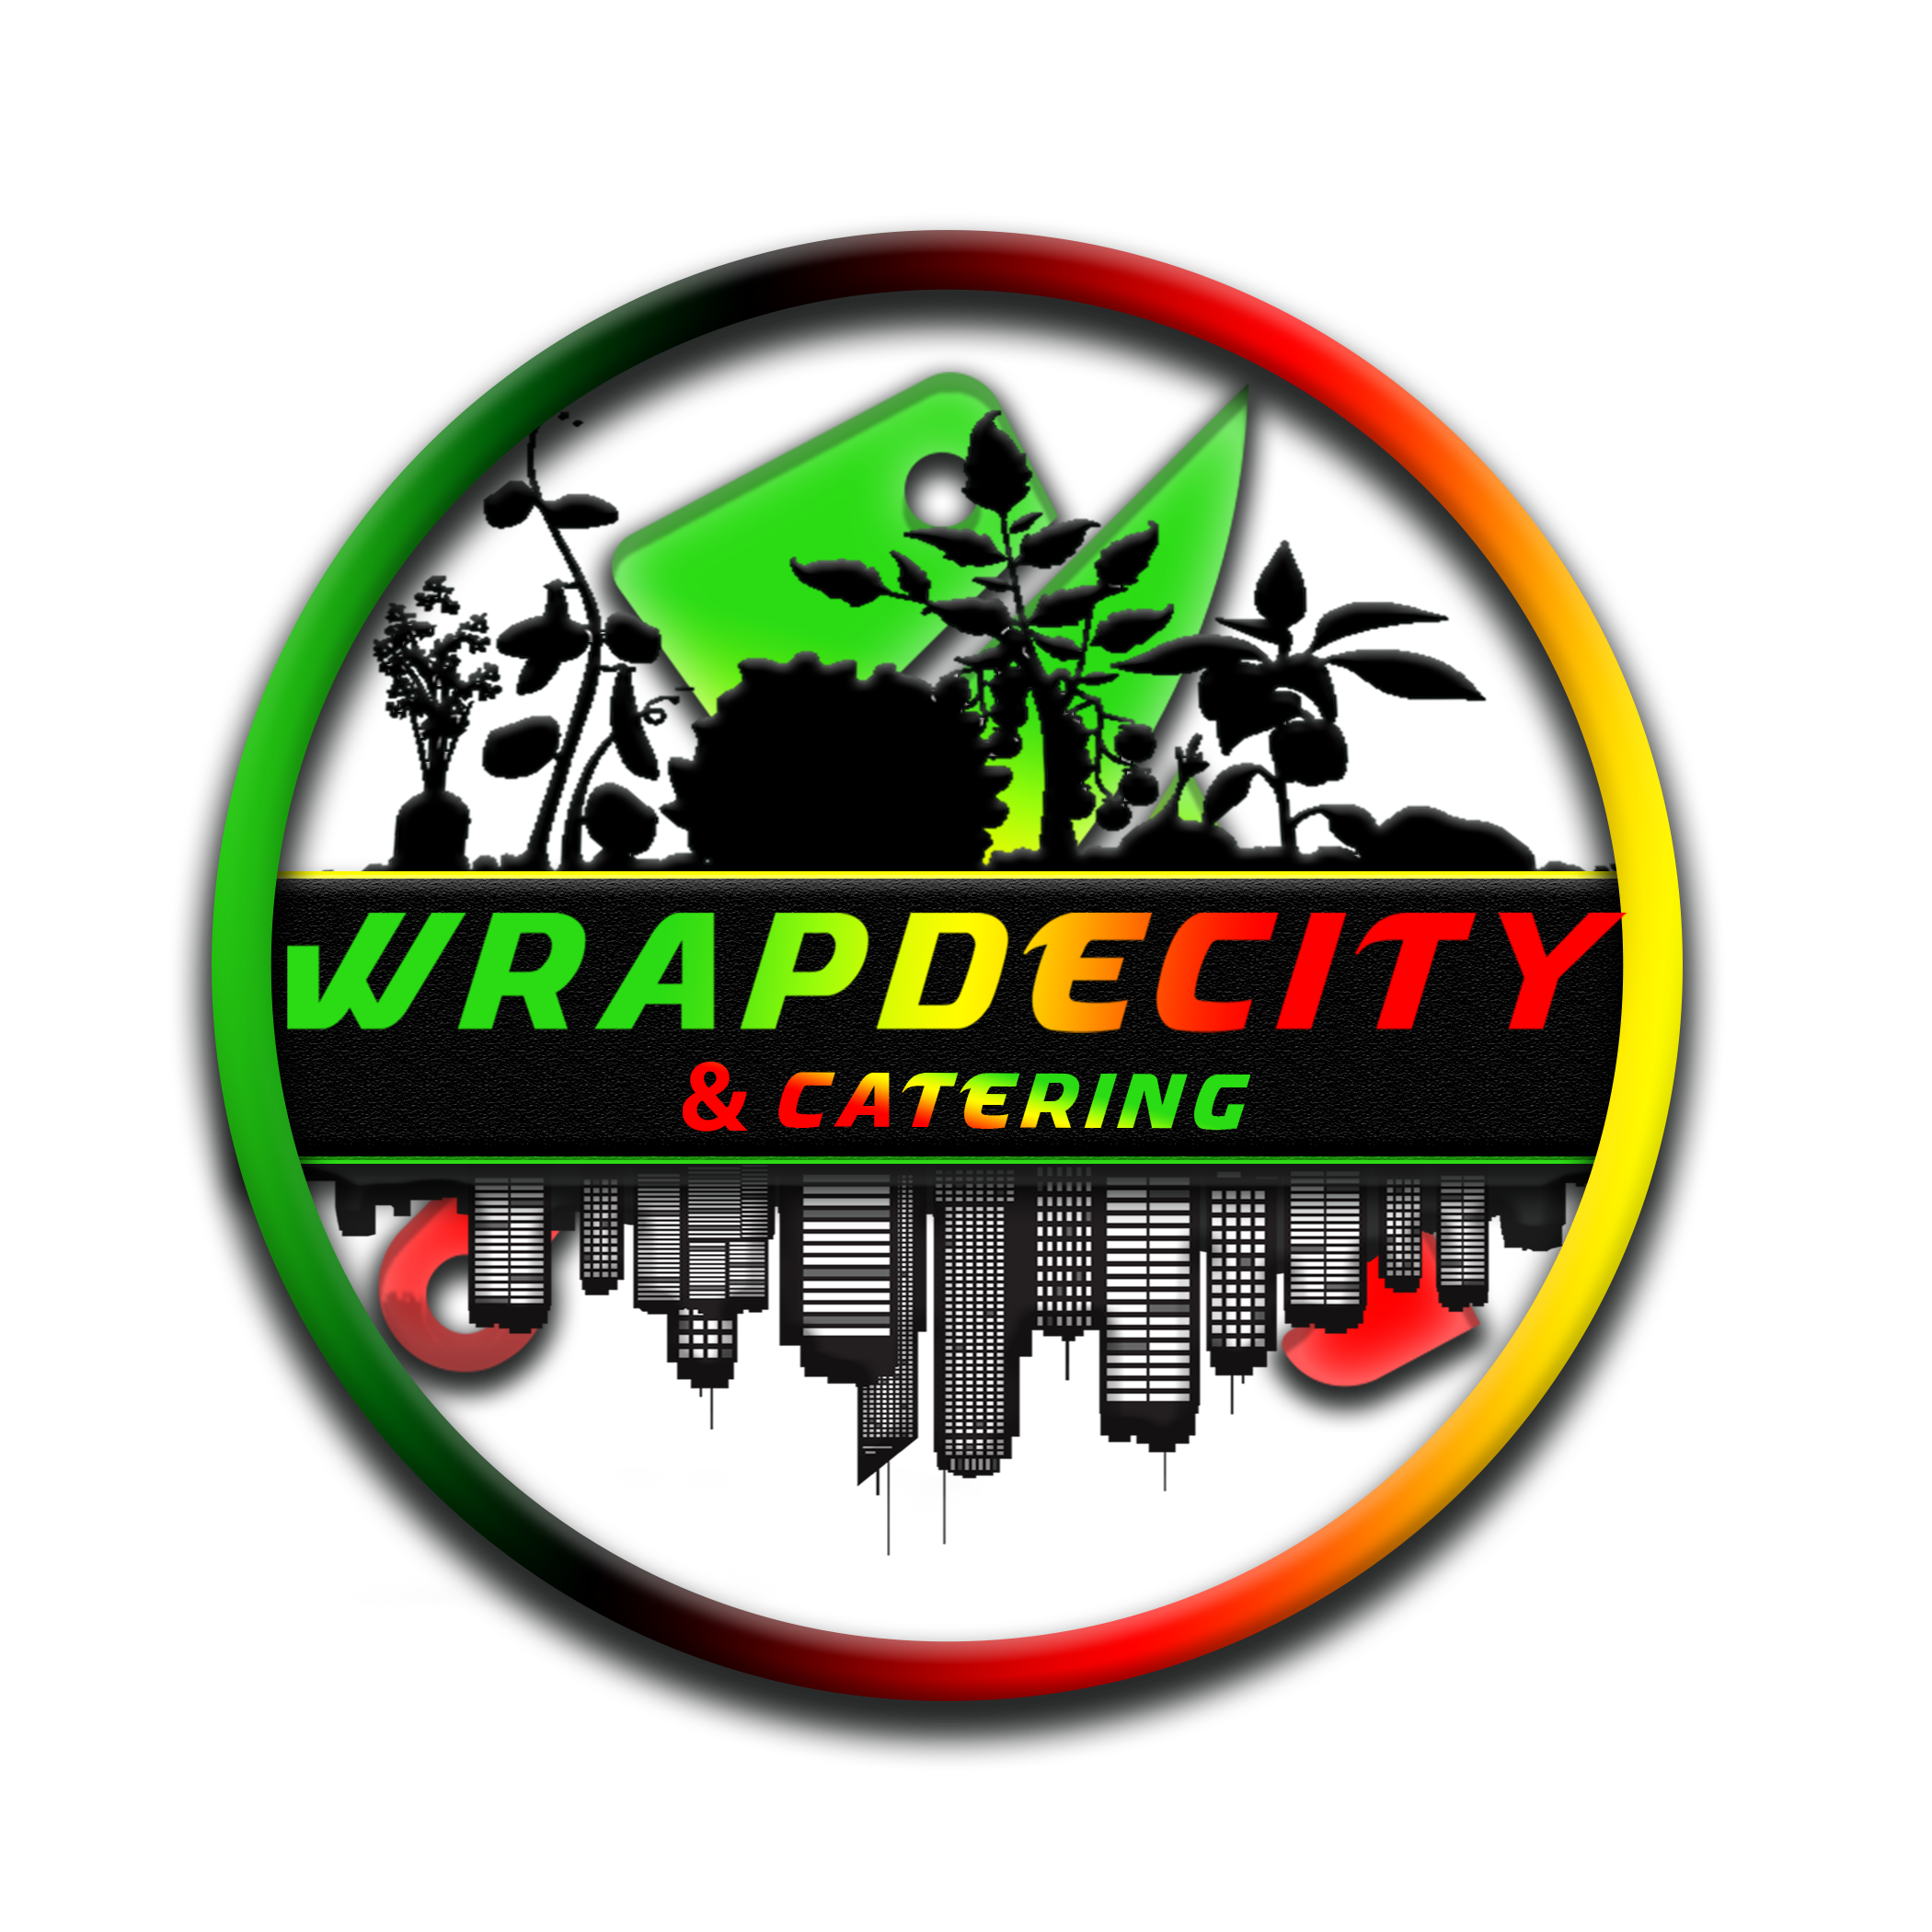 Wrap De City & Catering food truck profile image